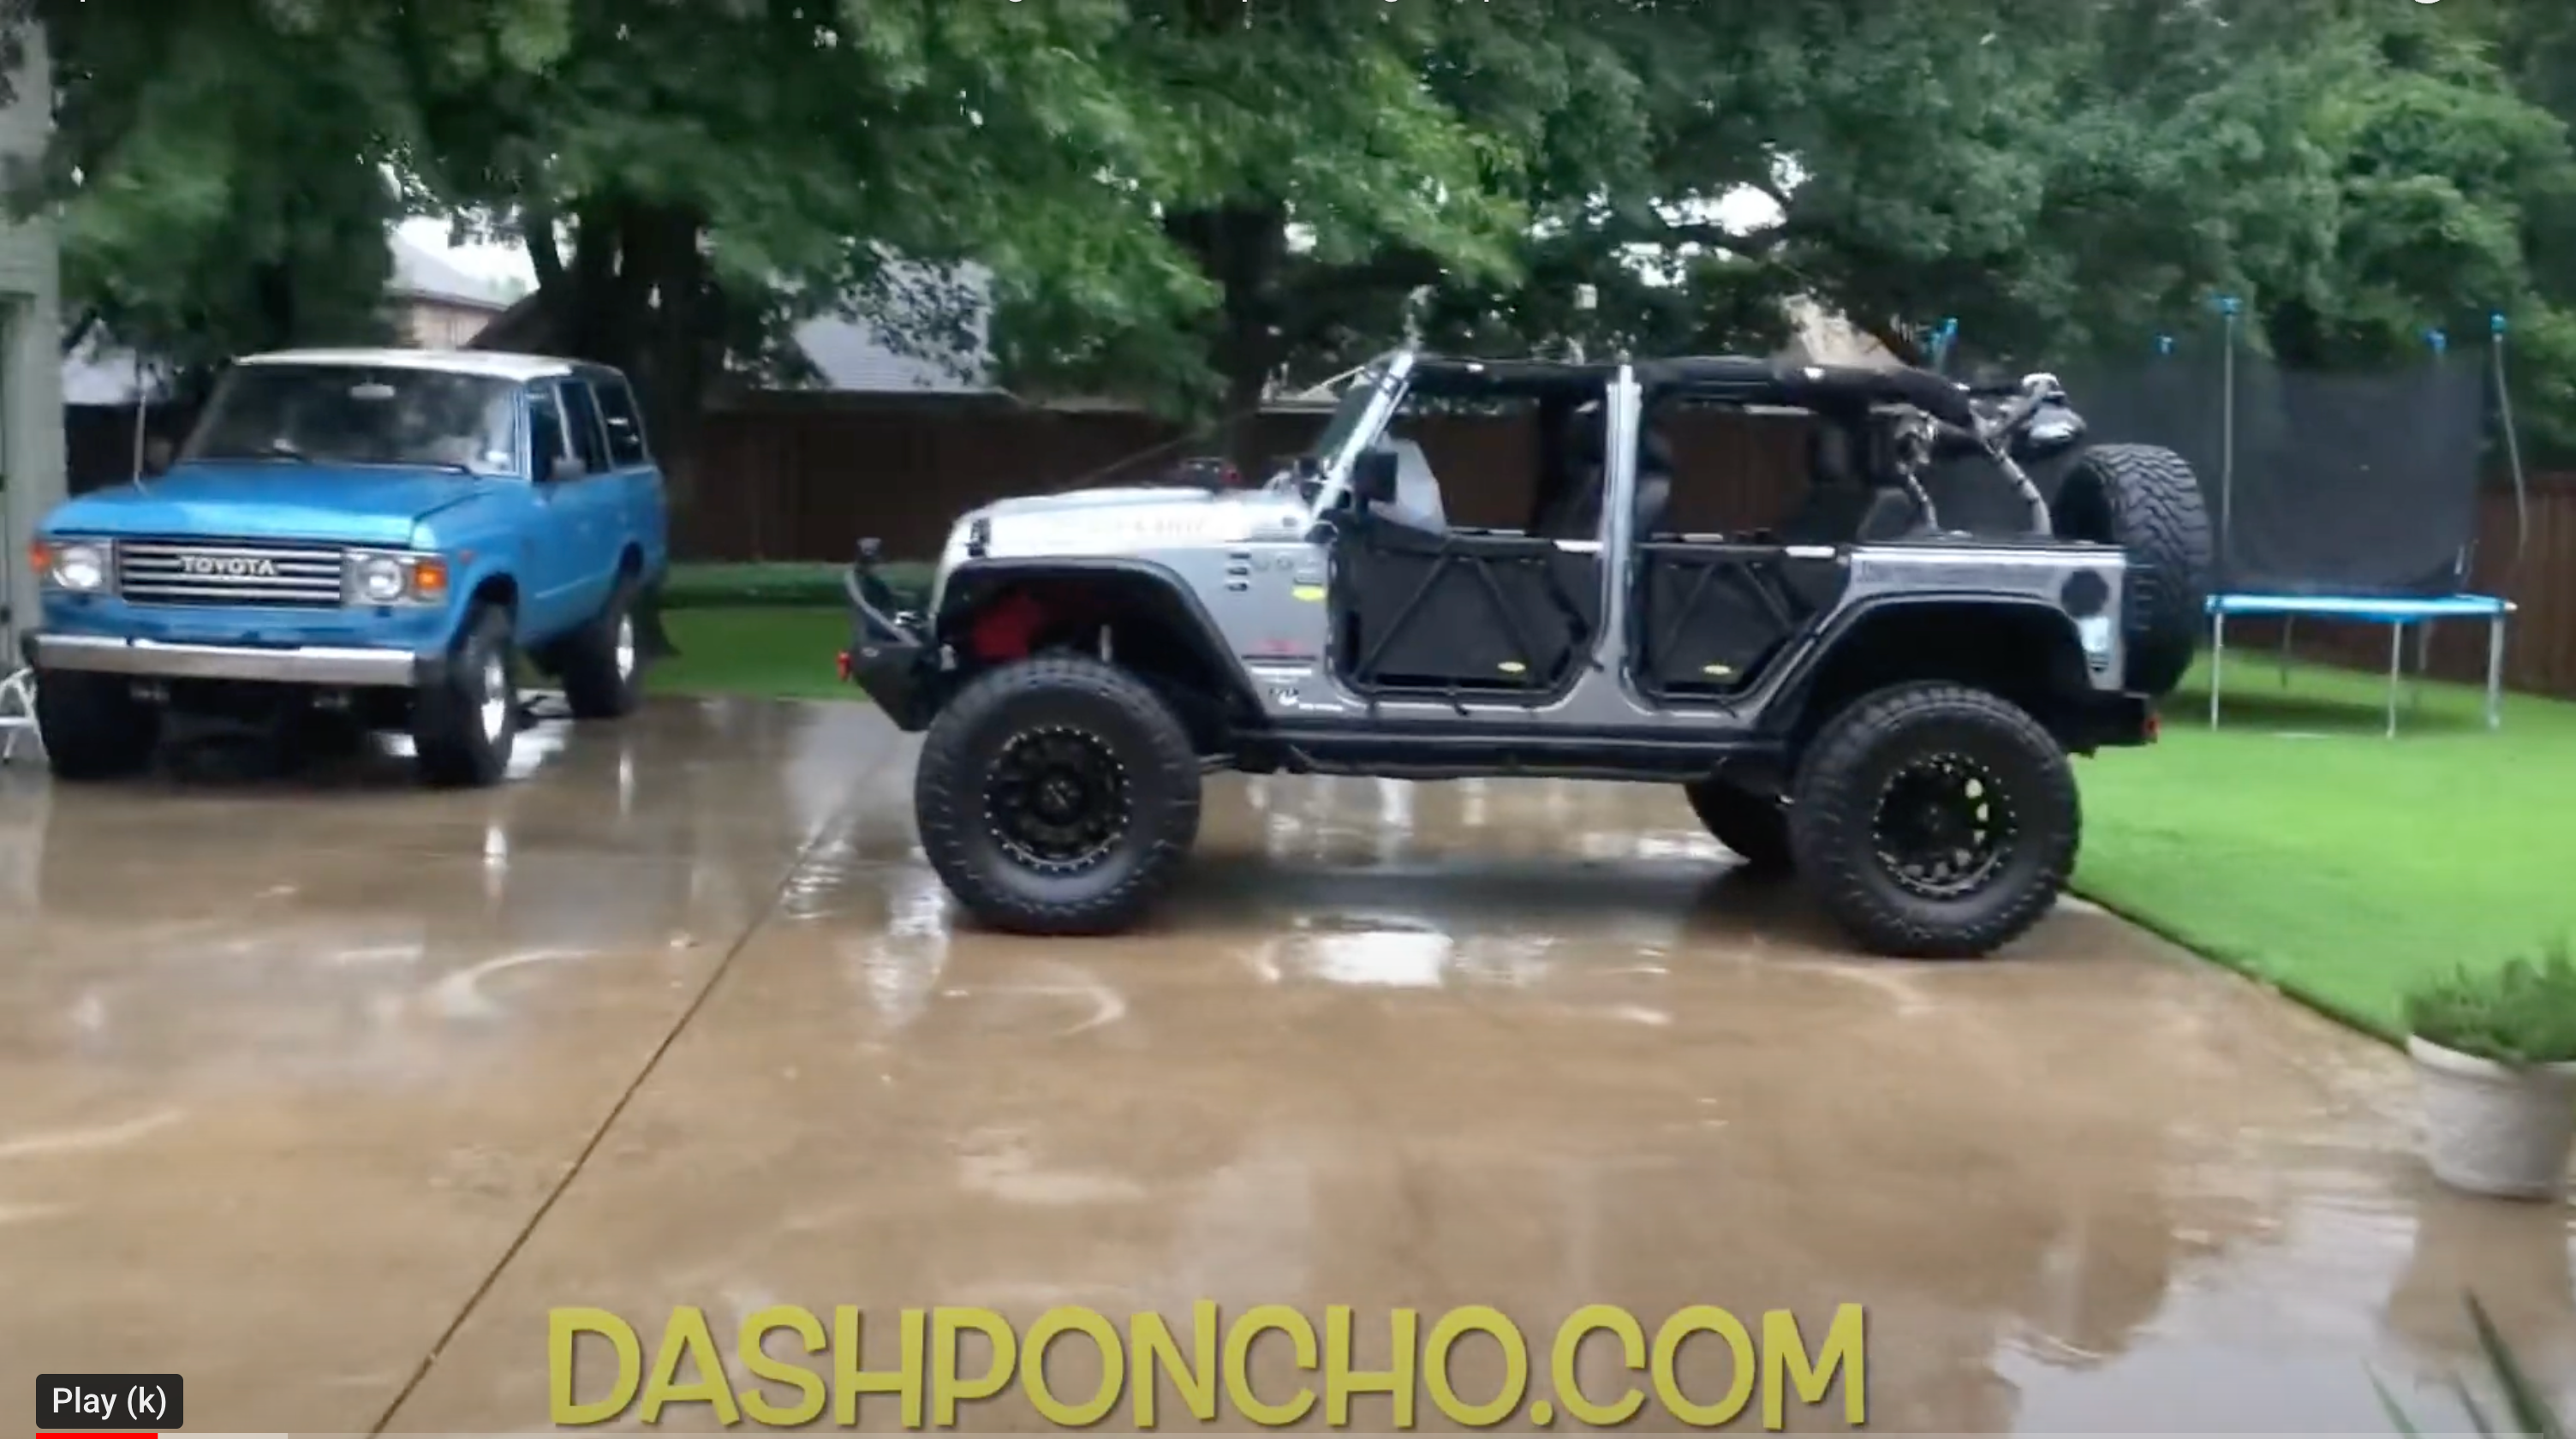 Load video: Testing Jeep Dash Poncho Cover in the rain